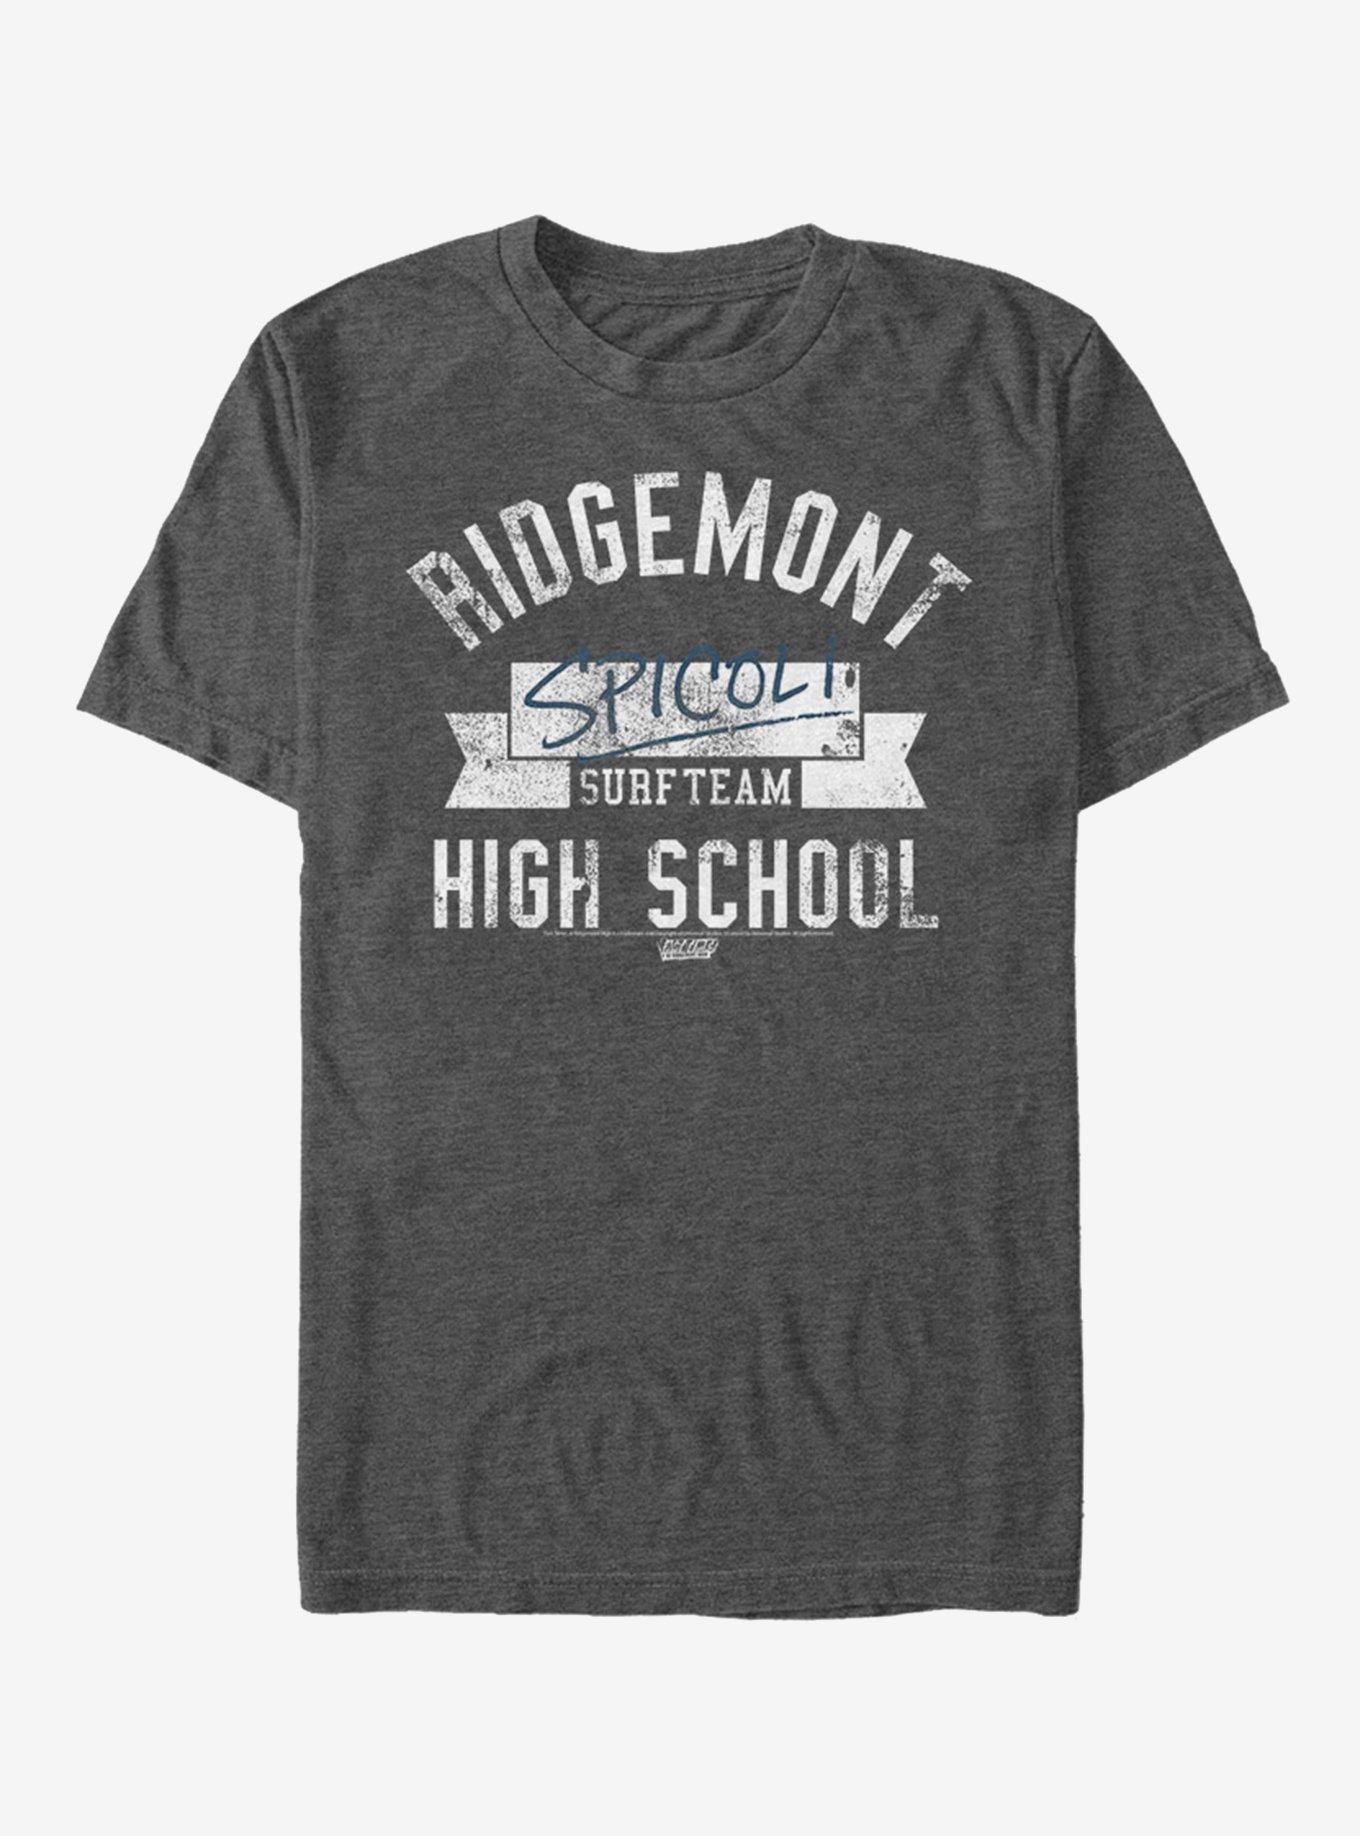 Fast Times at Ridgemont High Spicoli School T-Shirt